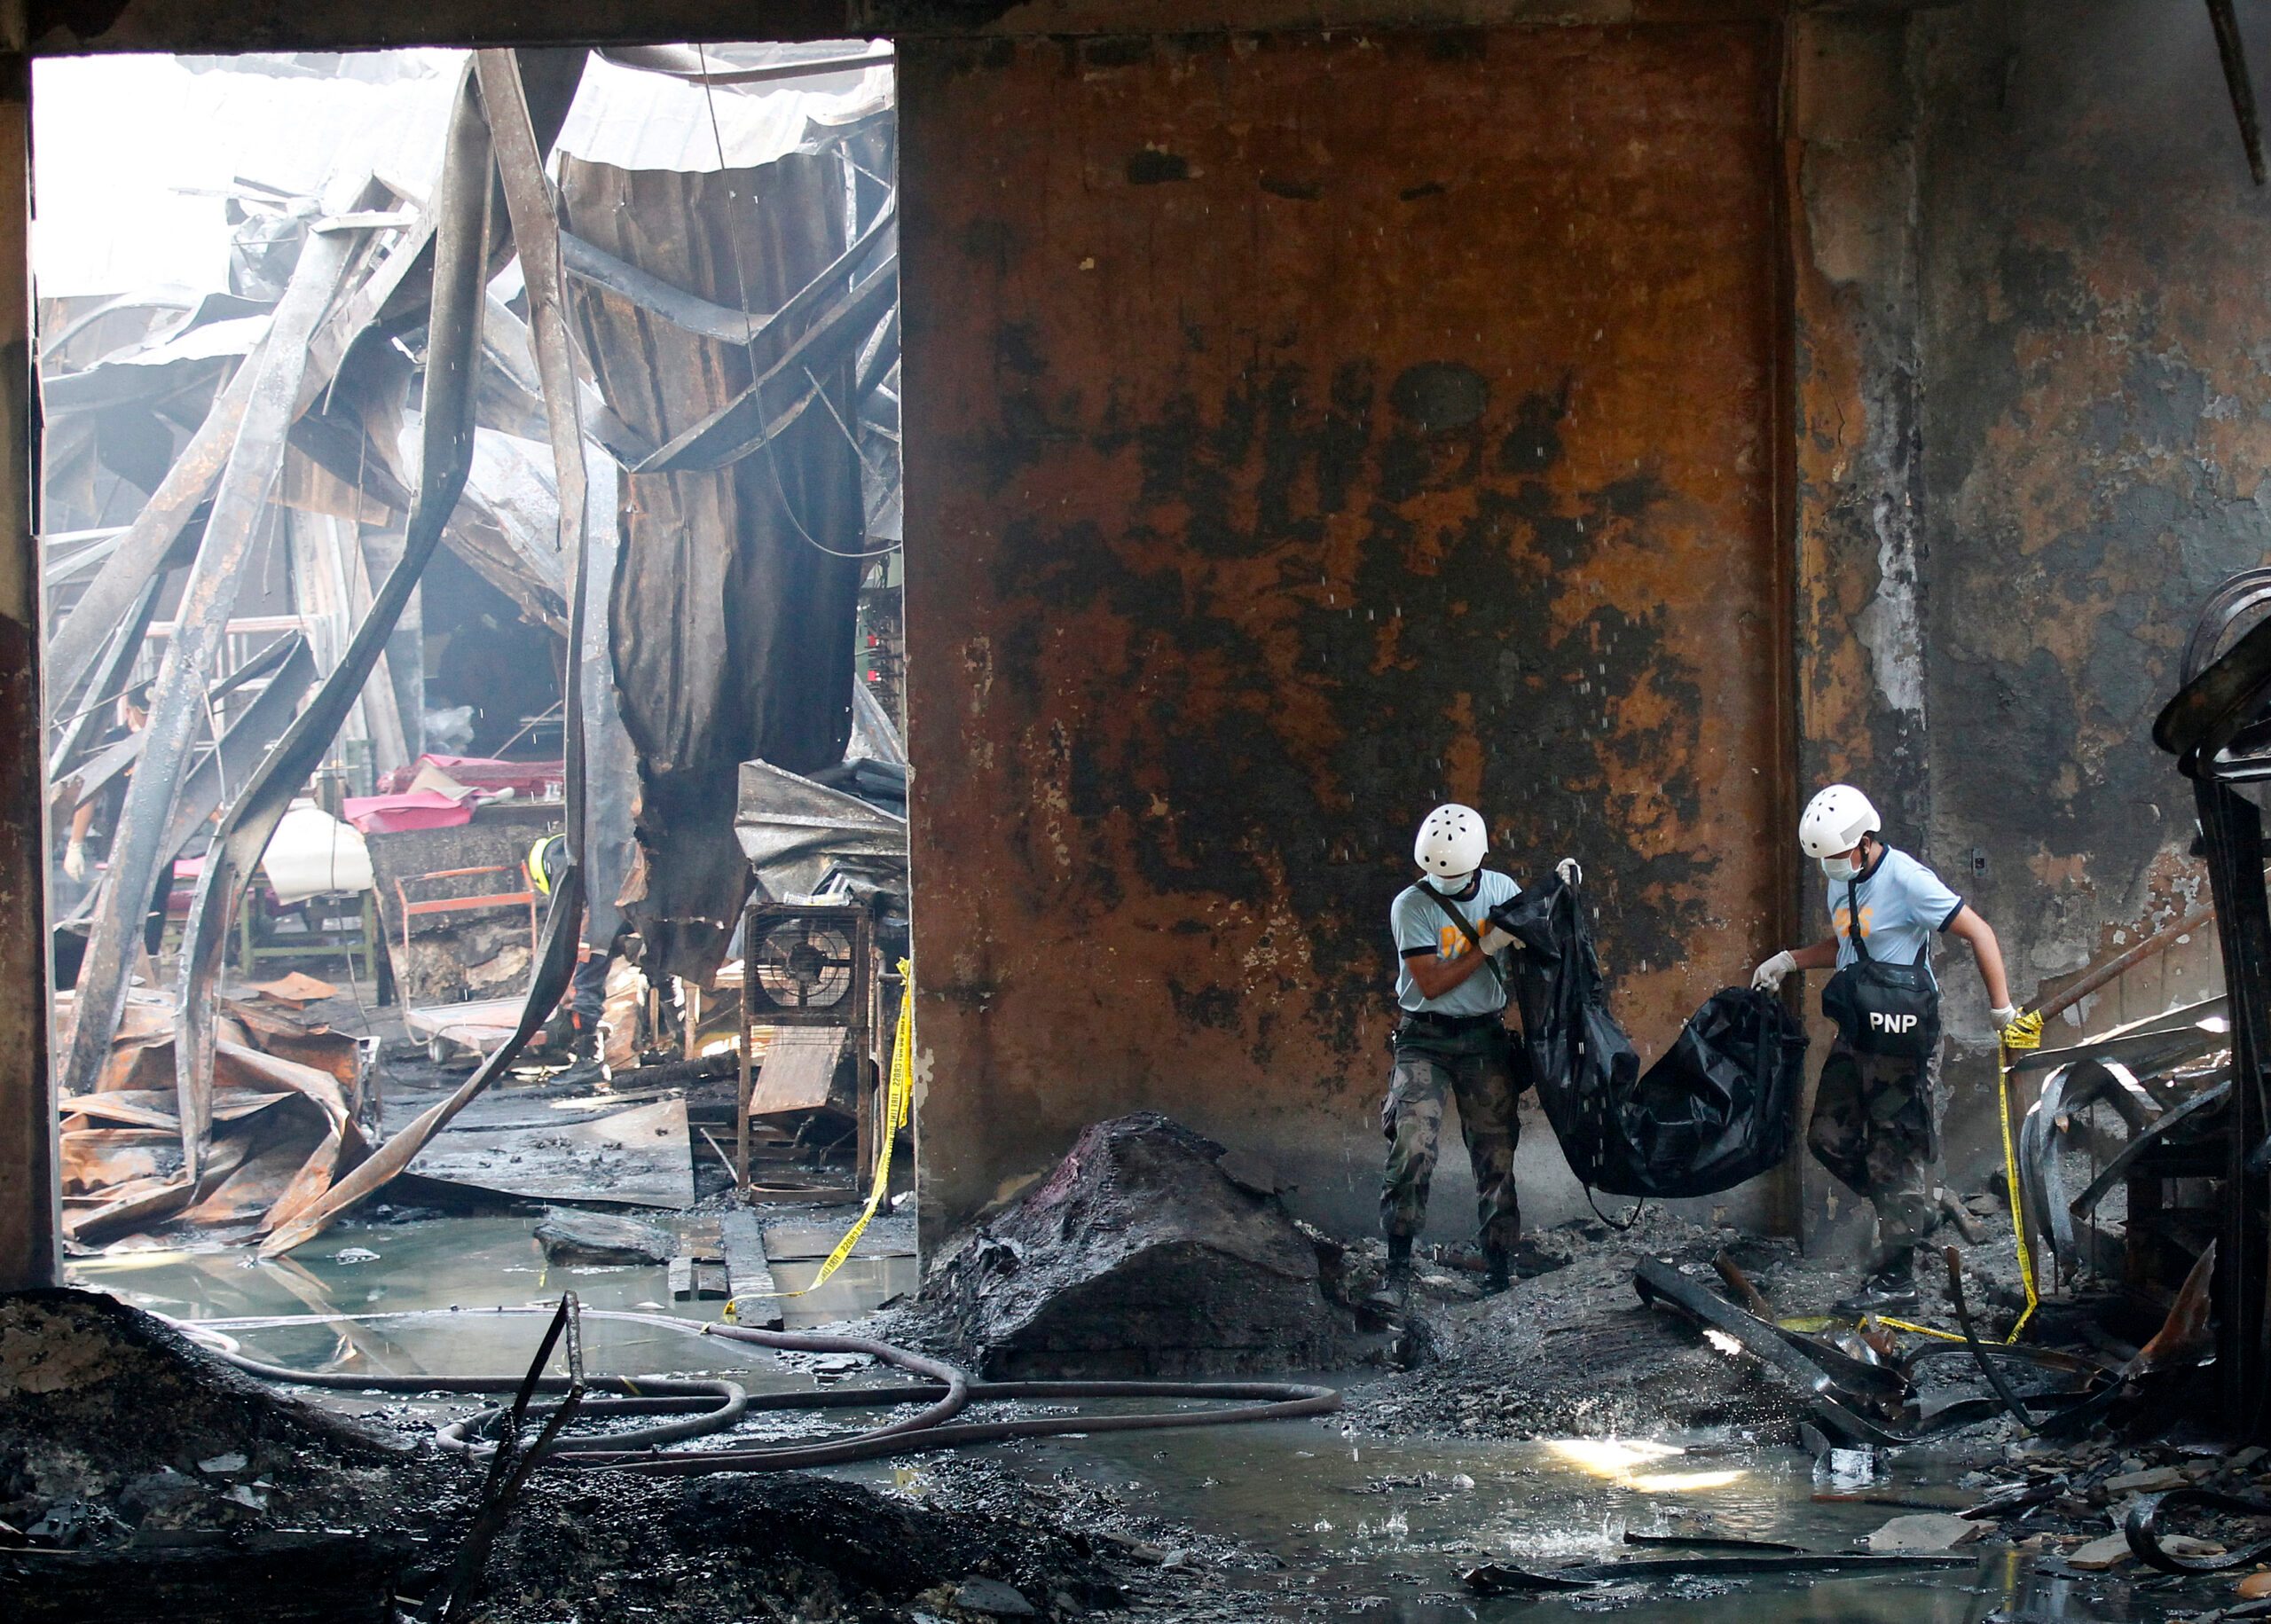 Kentex offers fire victims ‘negligible’ compensation